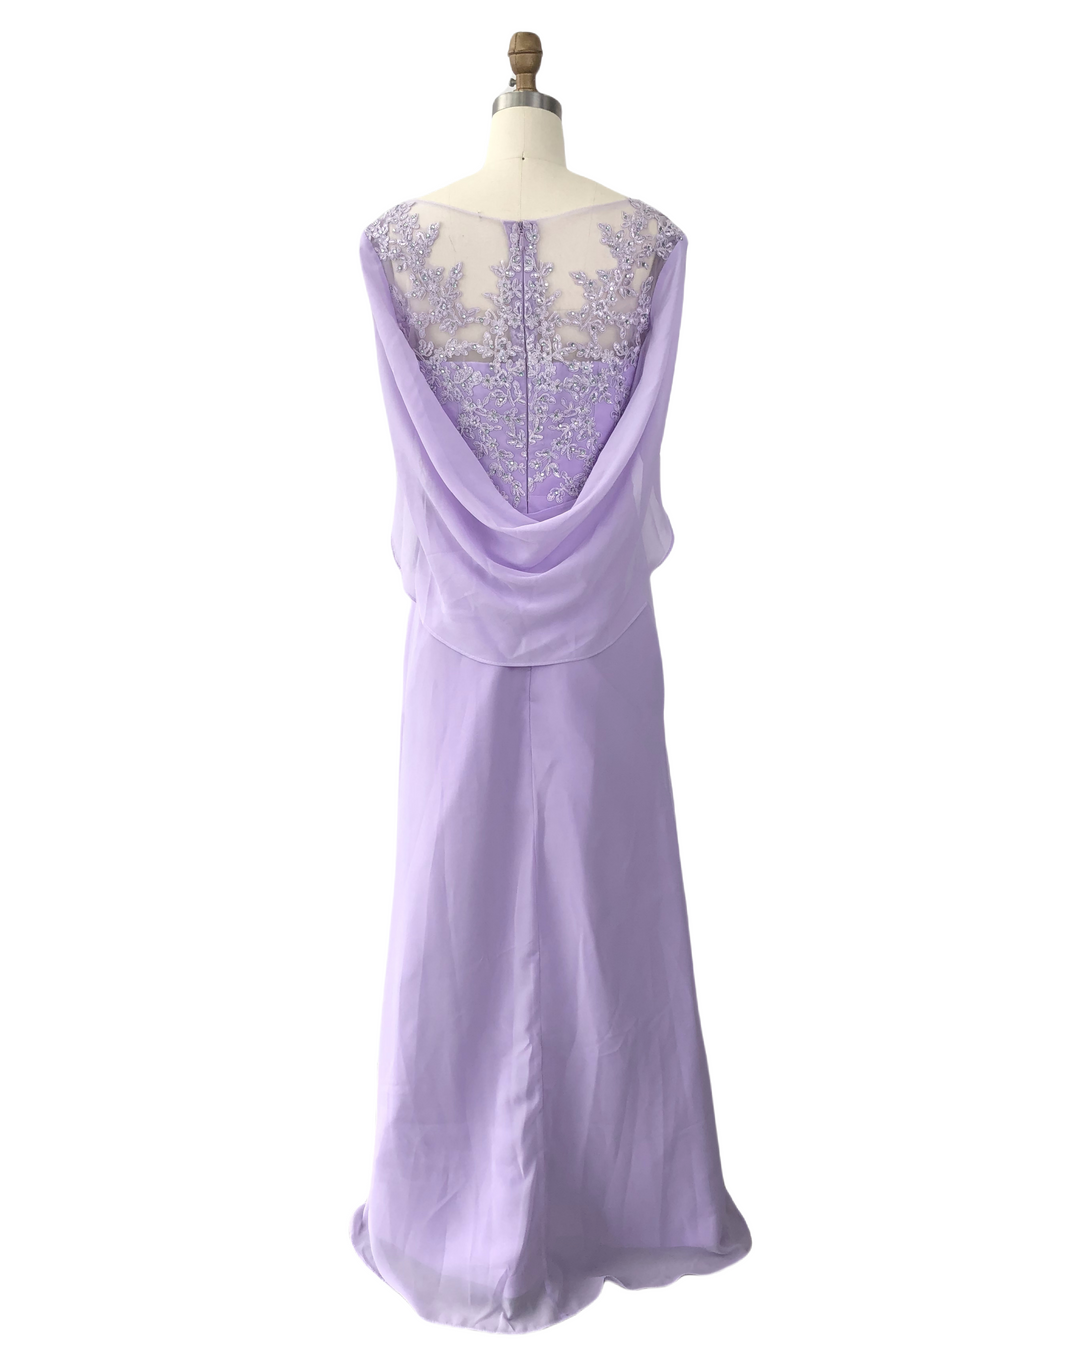 A-Line/Princess Mother of the Bride Dresses with Applique & Sequins